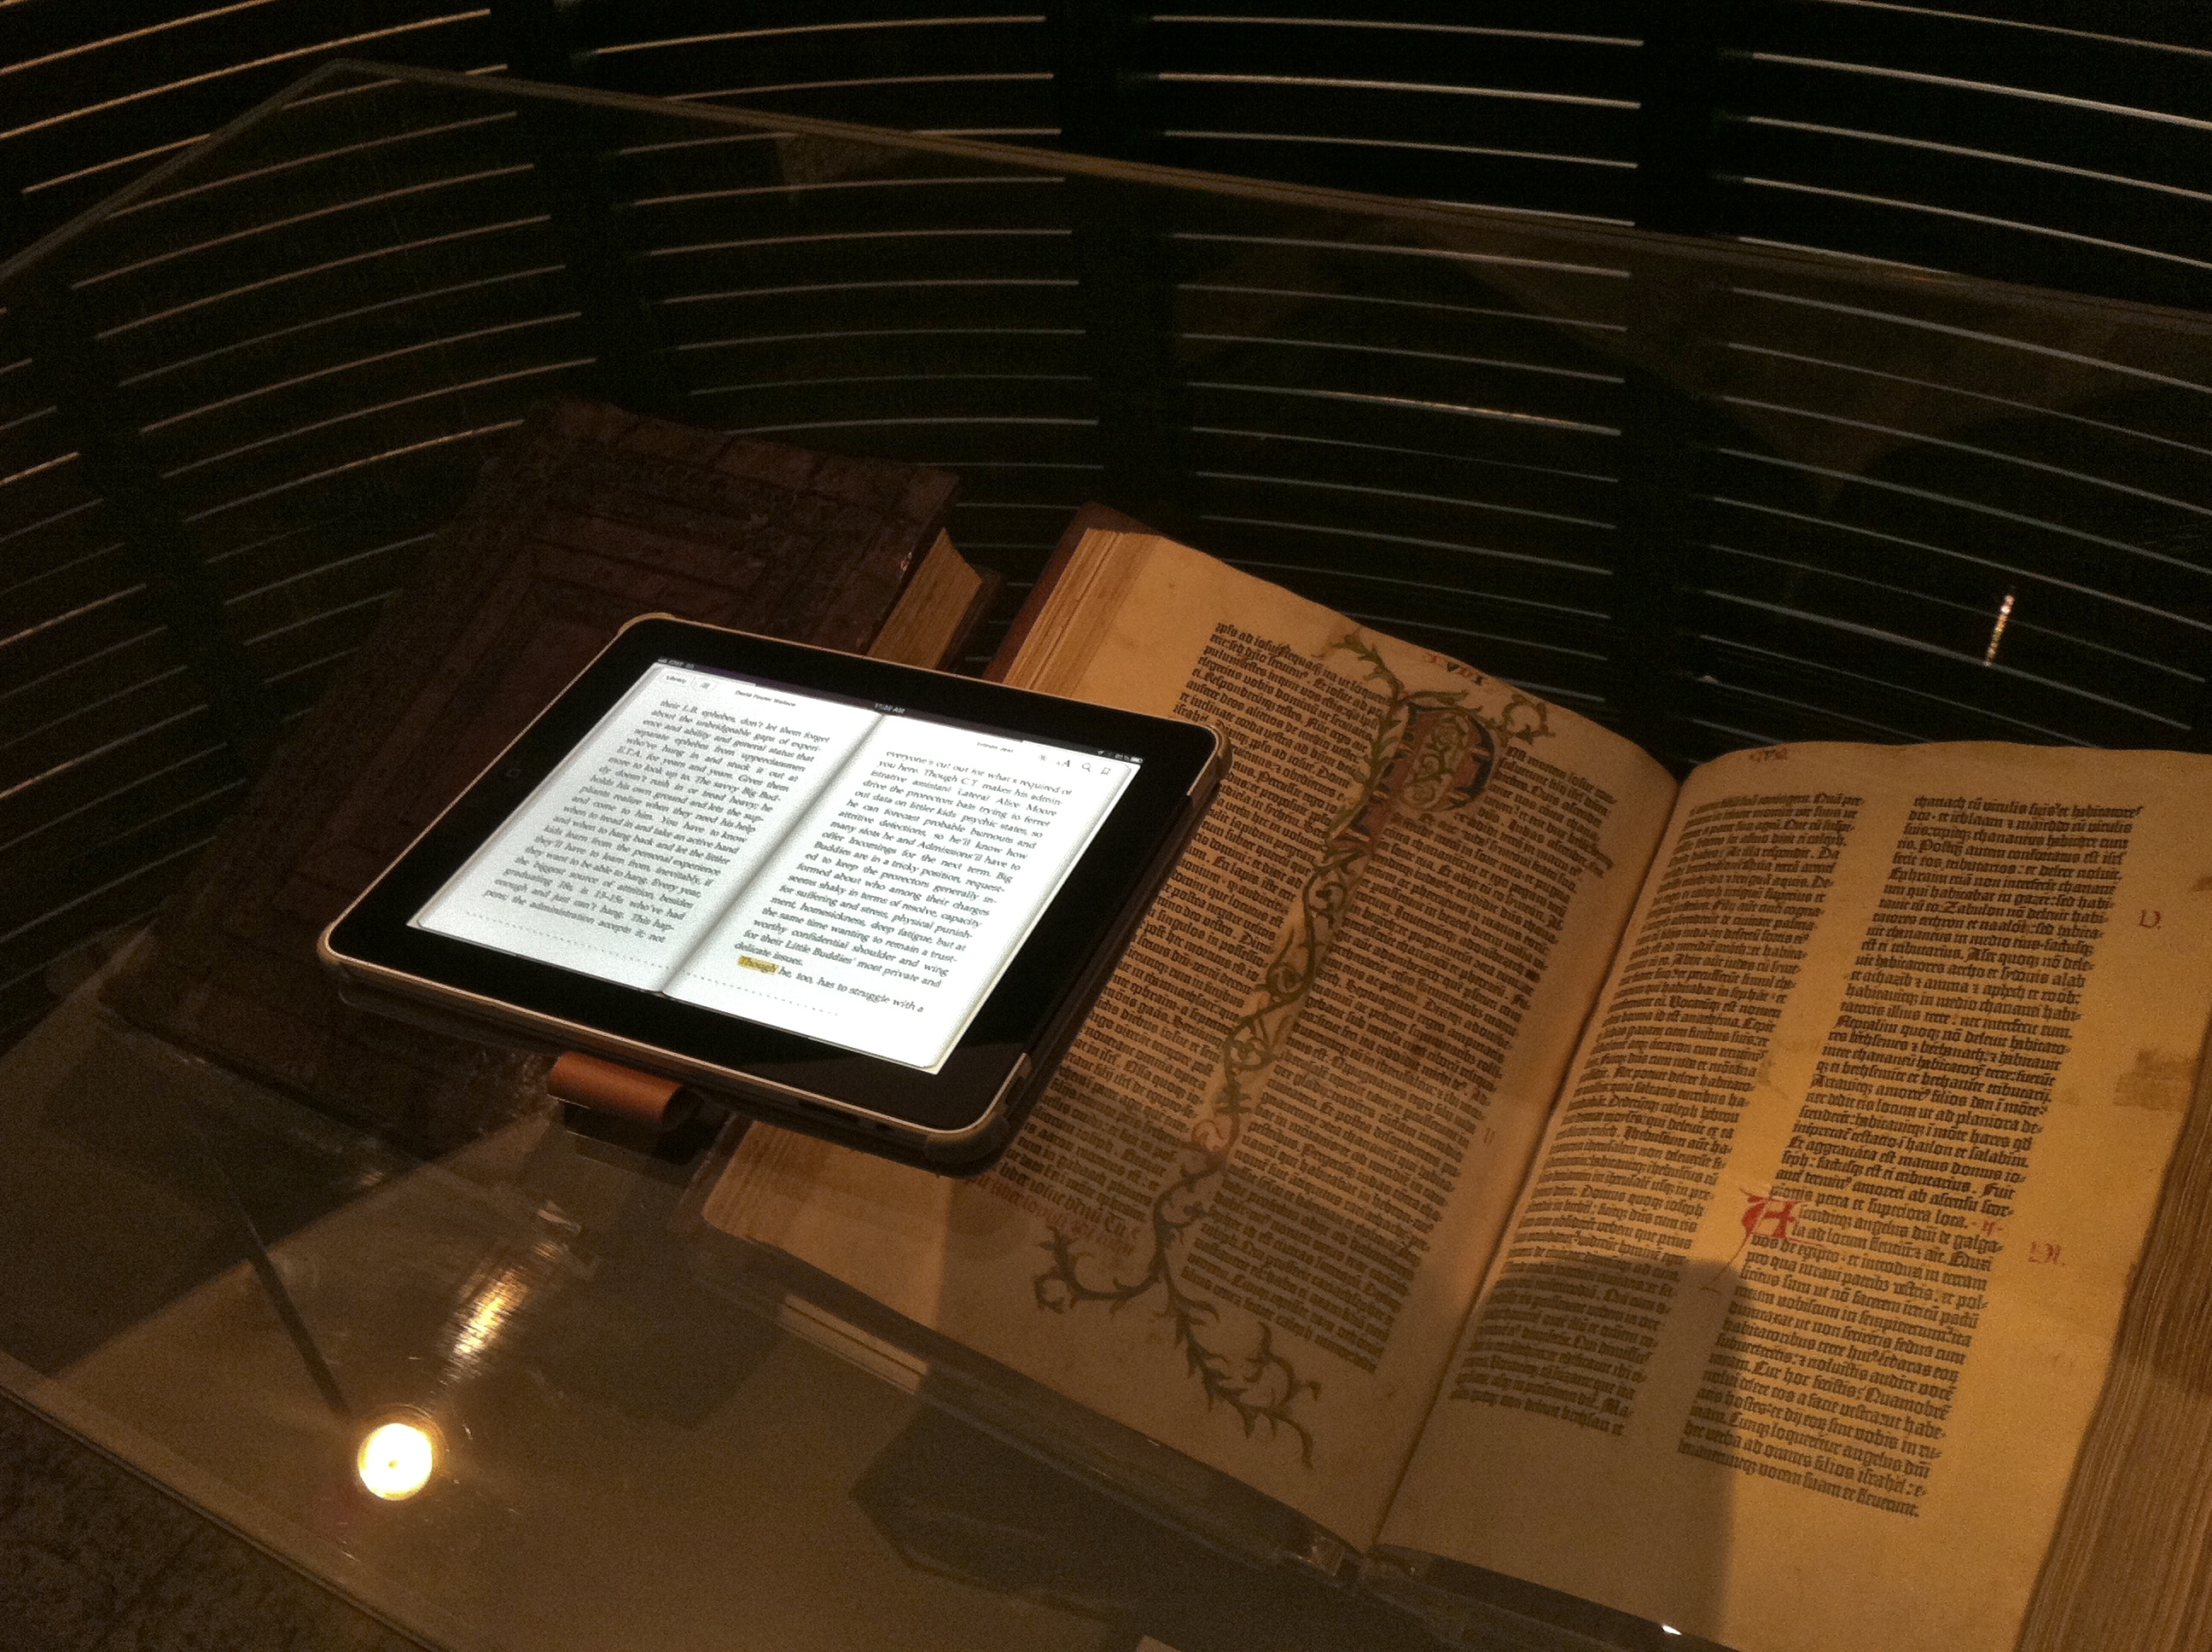 iPad book on top of a Guttenberg Bible